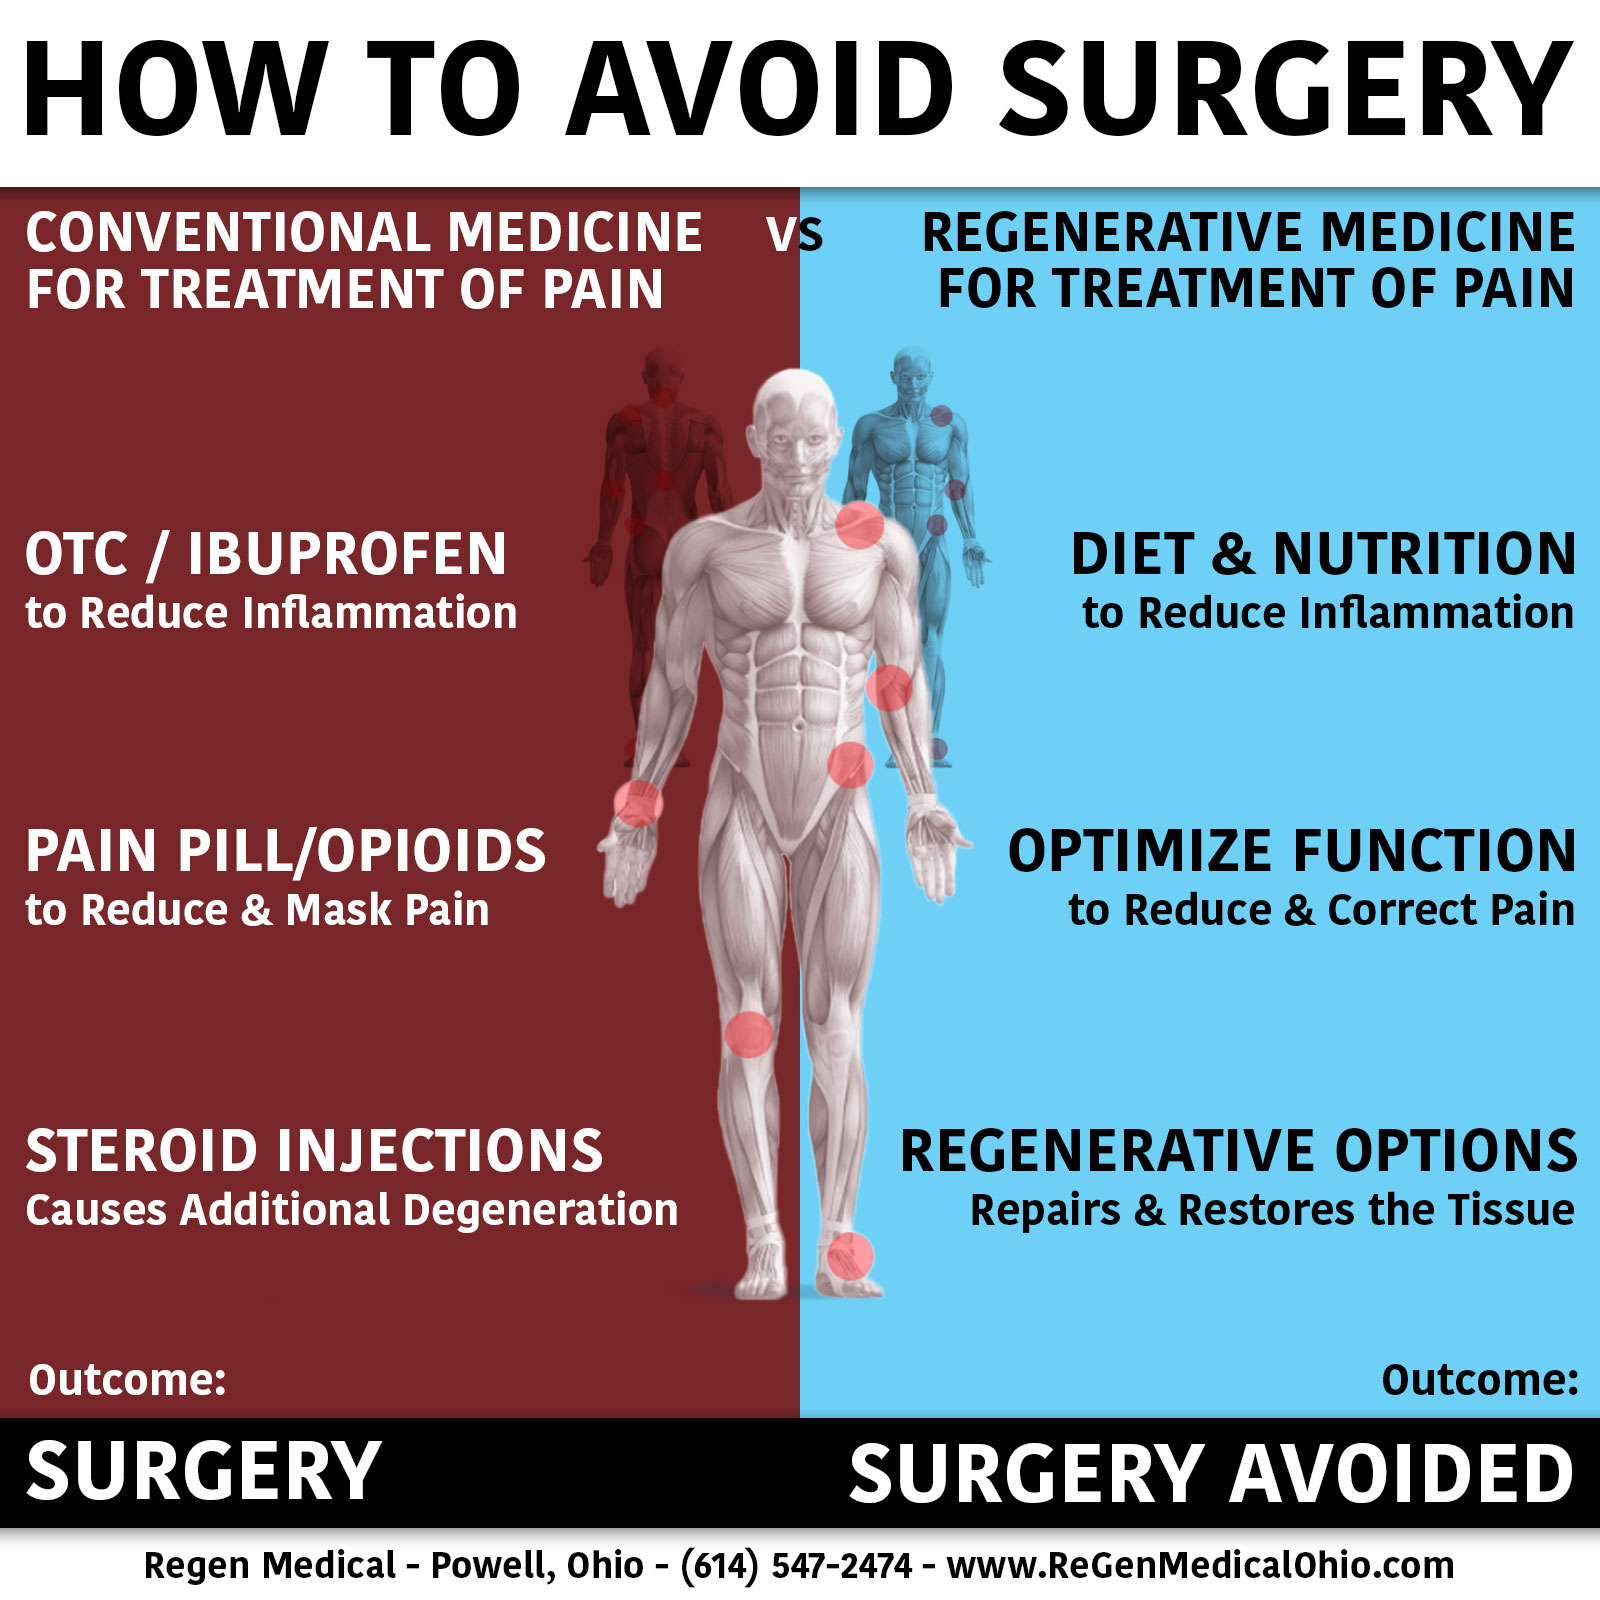 https://regenmedicalohio.com/wp-content/uploads/2018/06/ReGen-Medical-How-To-Avoid-Surgery-Infographic.jpg